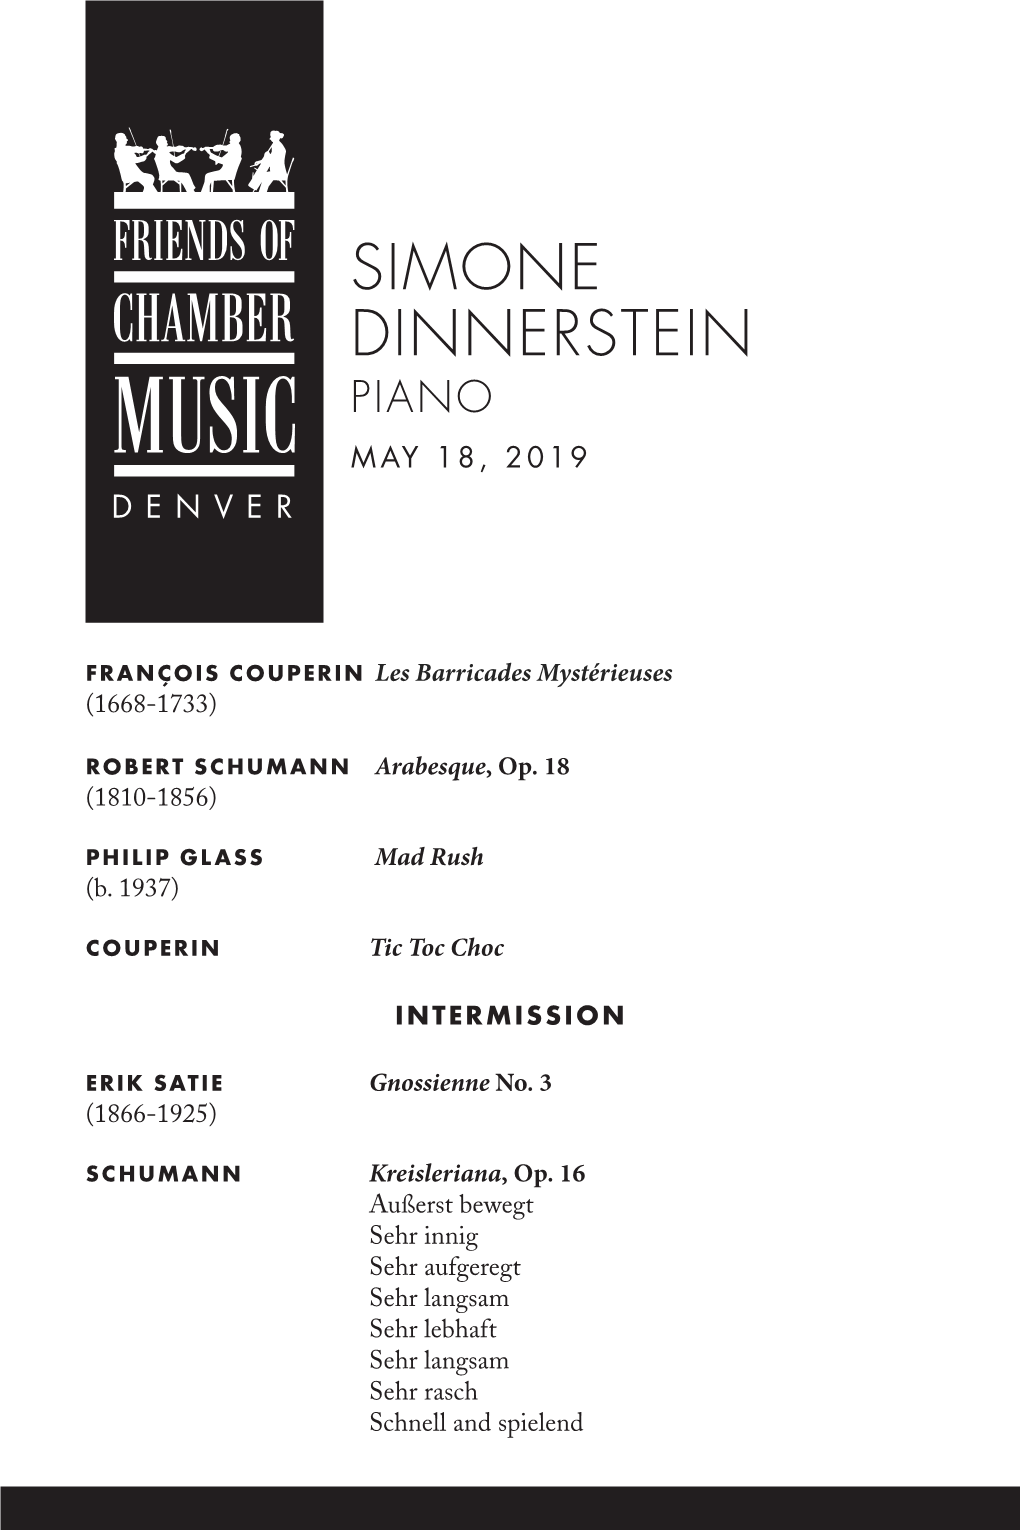 Simone Dinnerstein Piano May 18, 2019 Denver